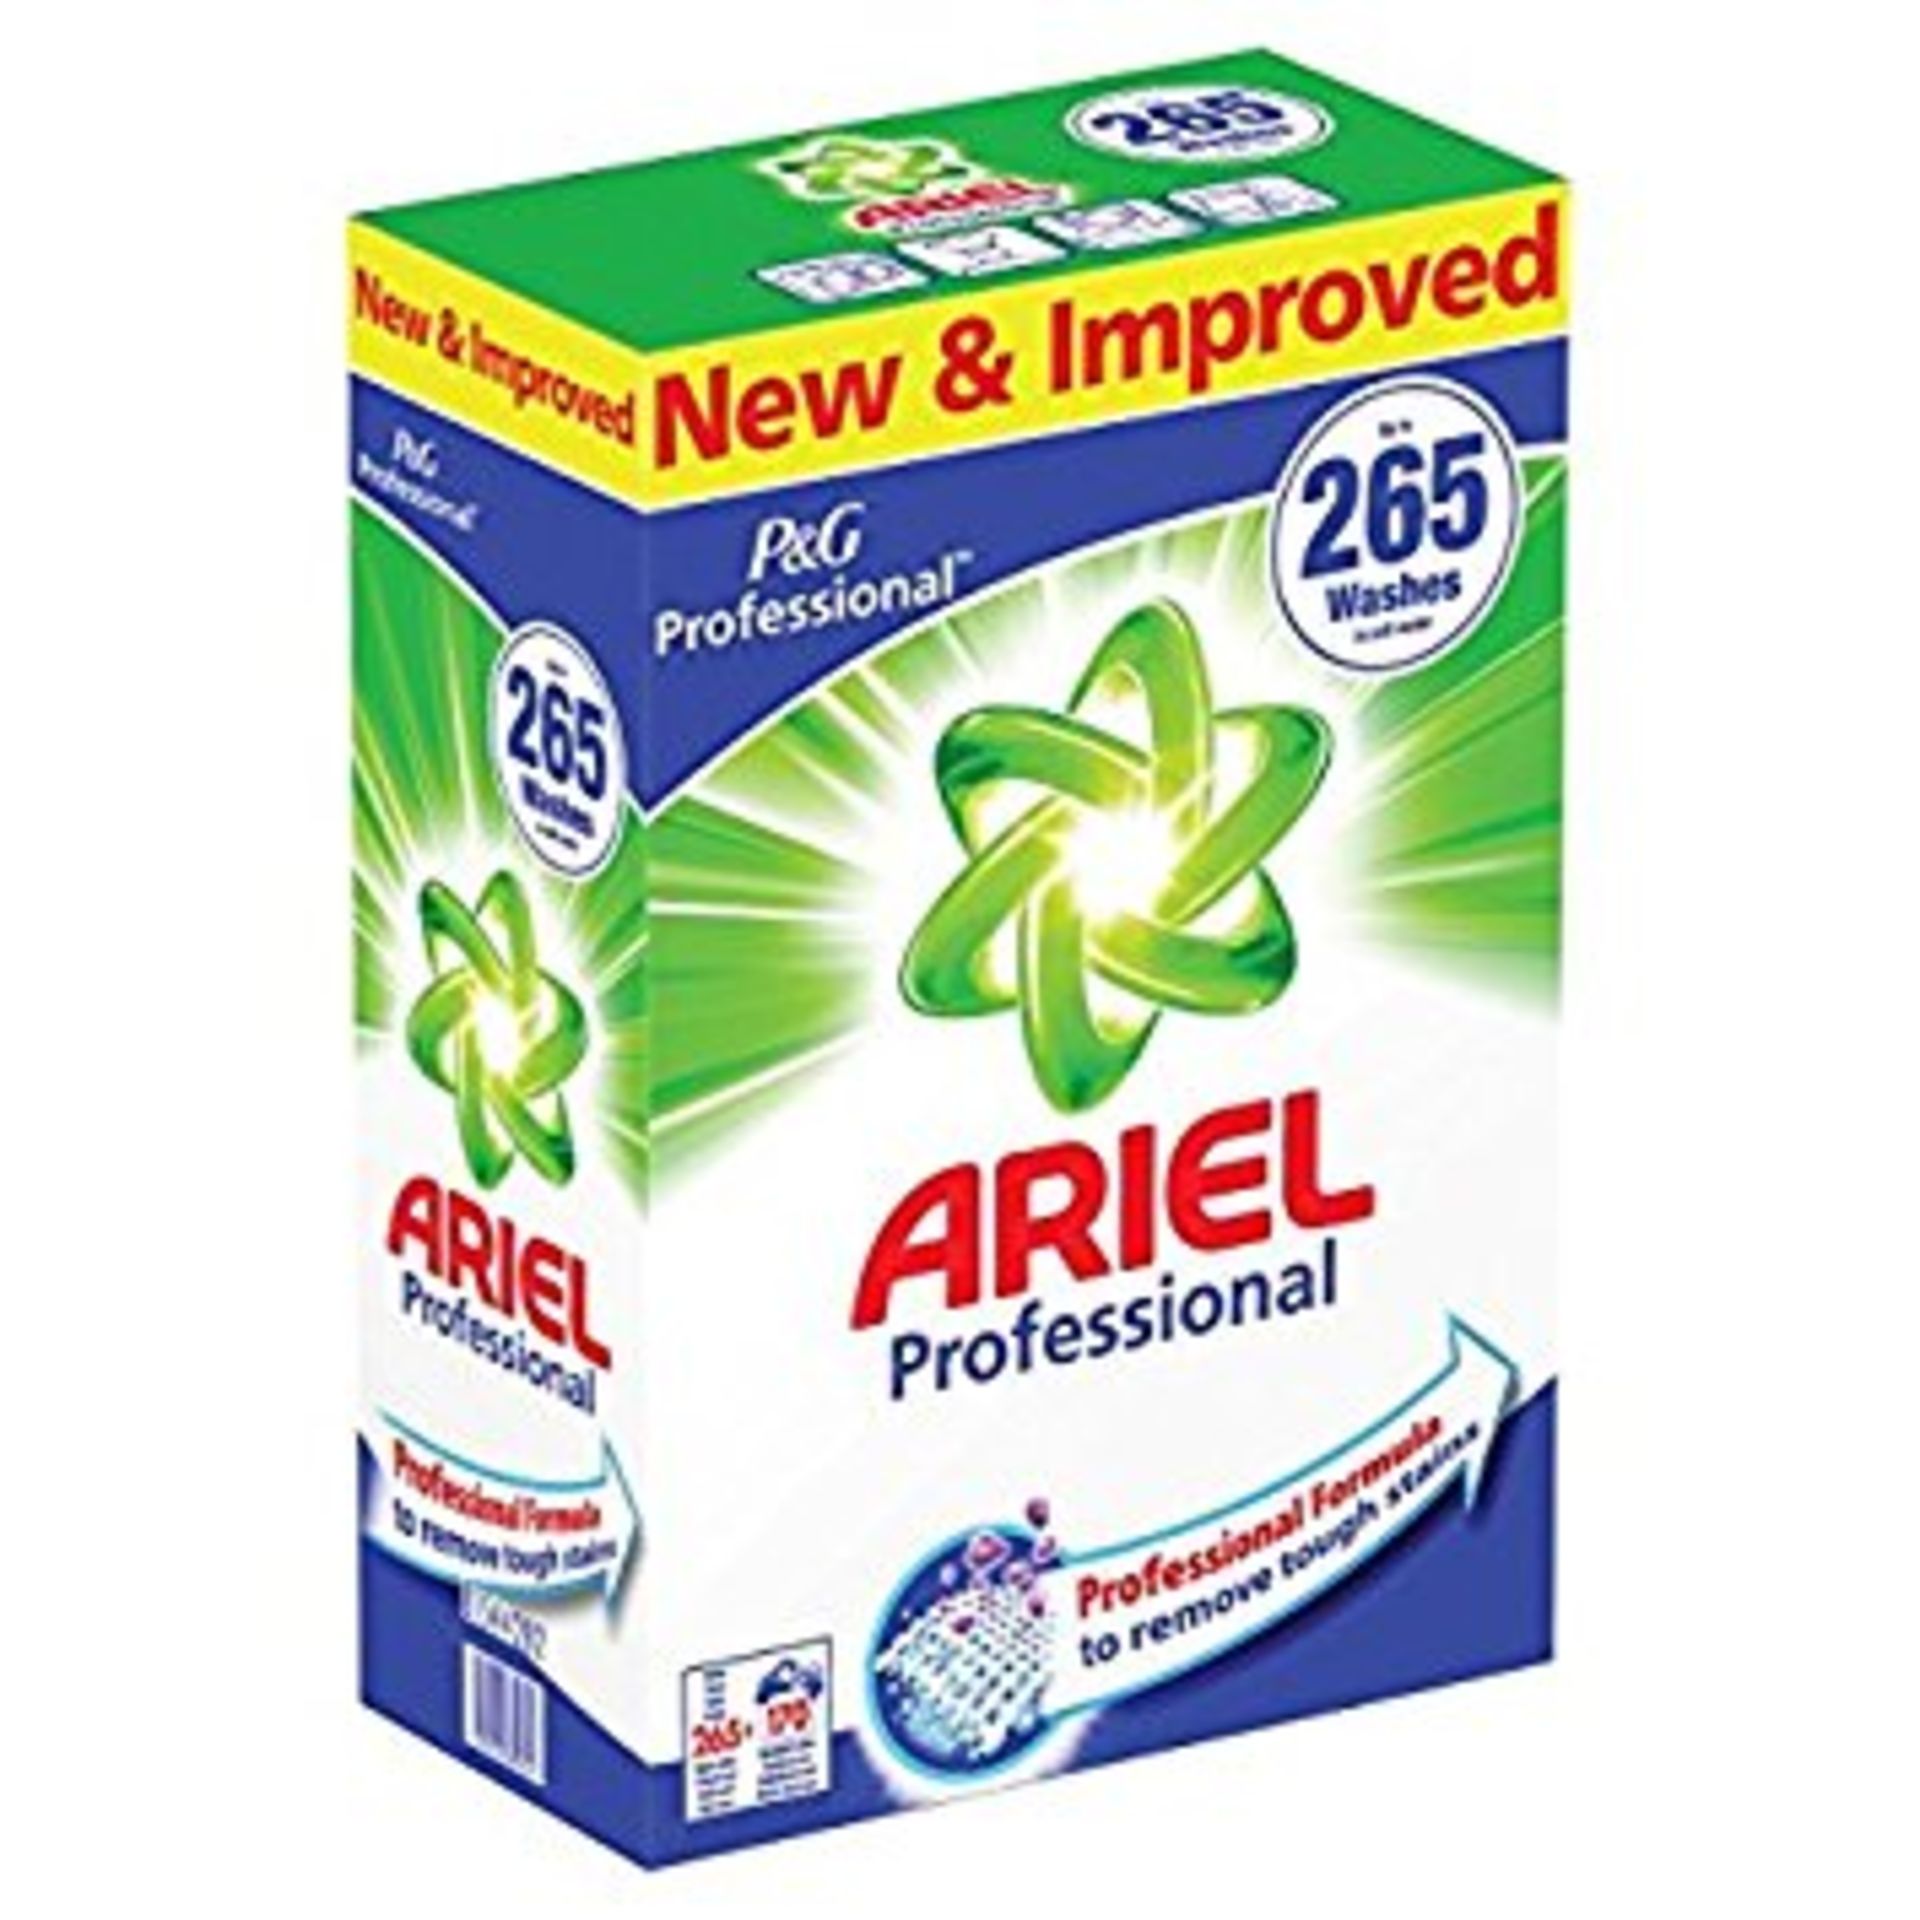 V *TRADE QTY* Brand New Ariel Professional XXL 265 Washes Washing Powder X 10 YOUR BID PRICE TO BE